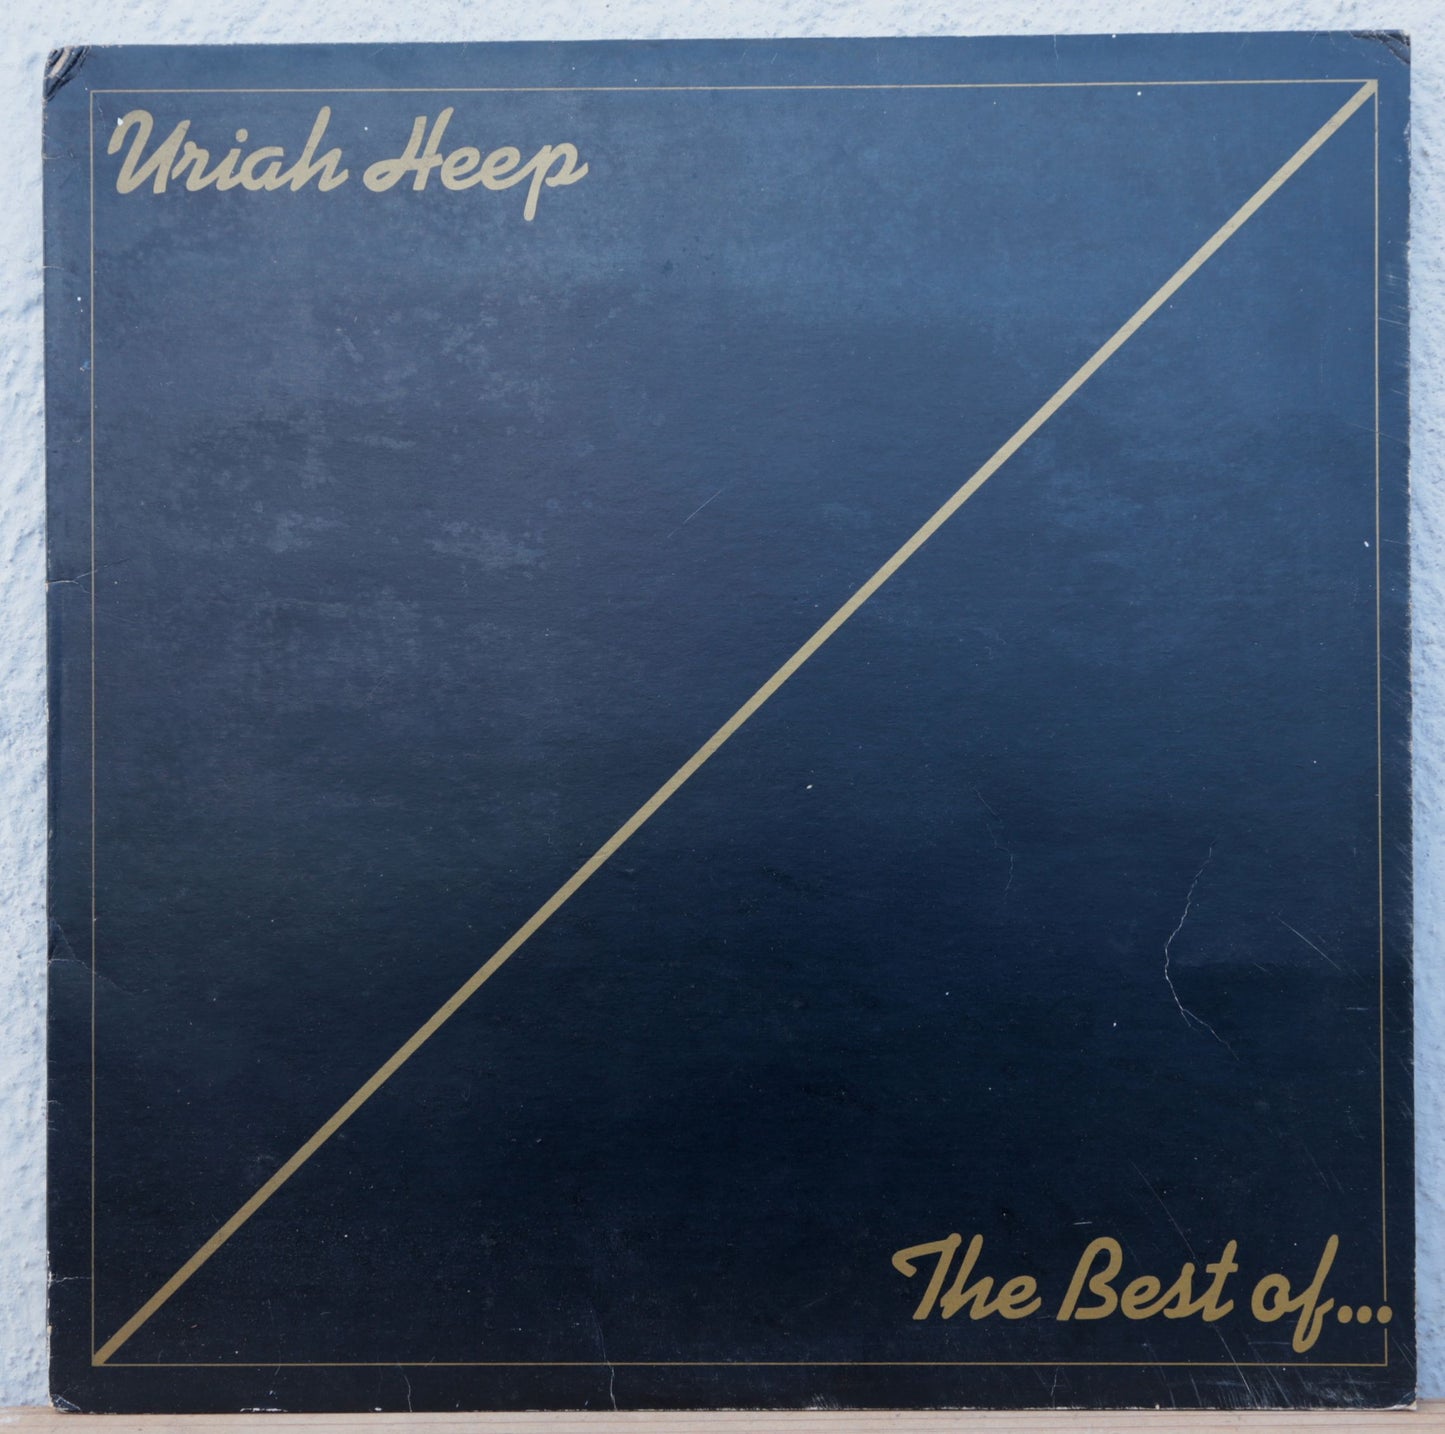 Uriah Heep - The best of...